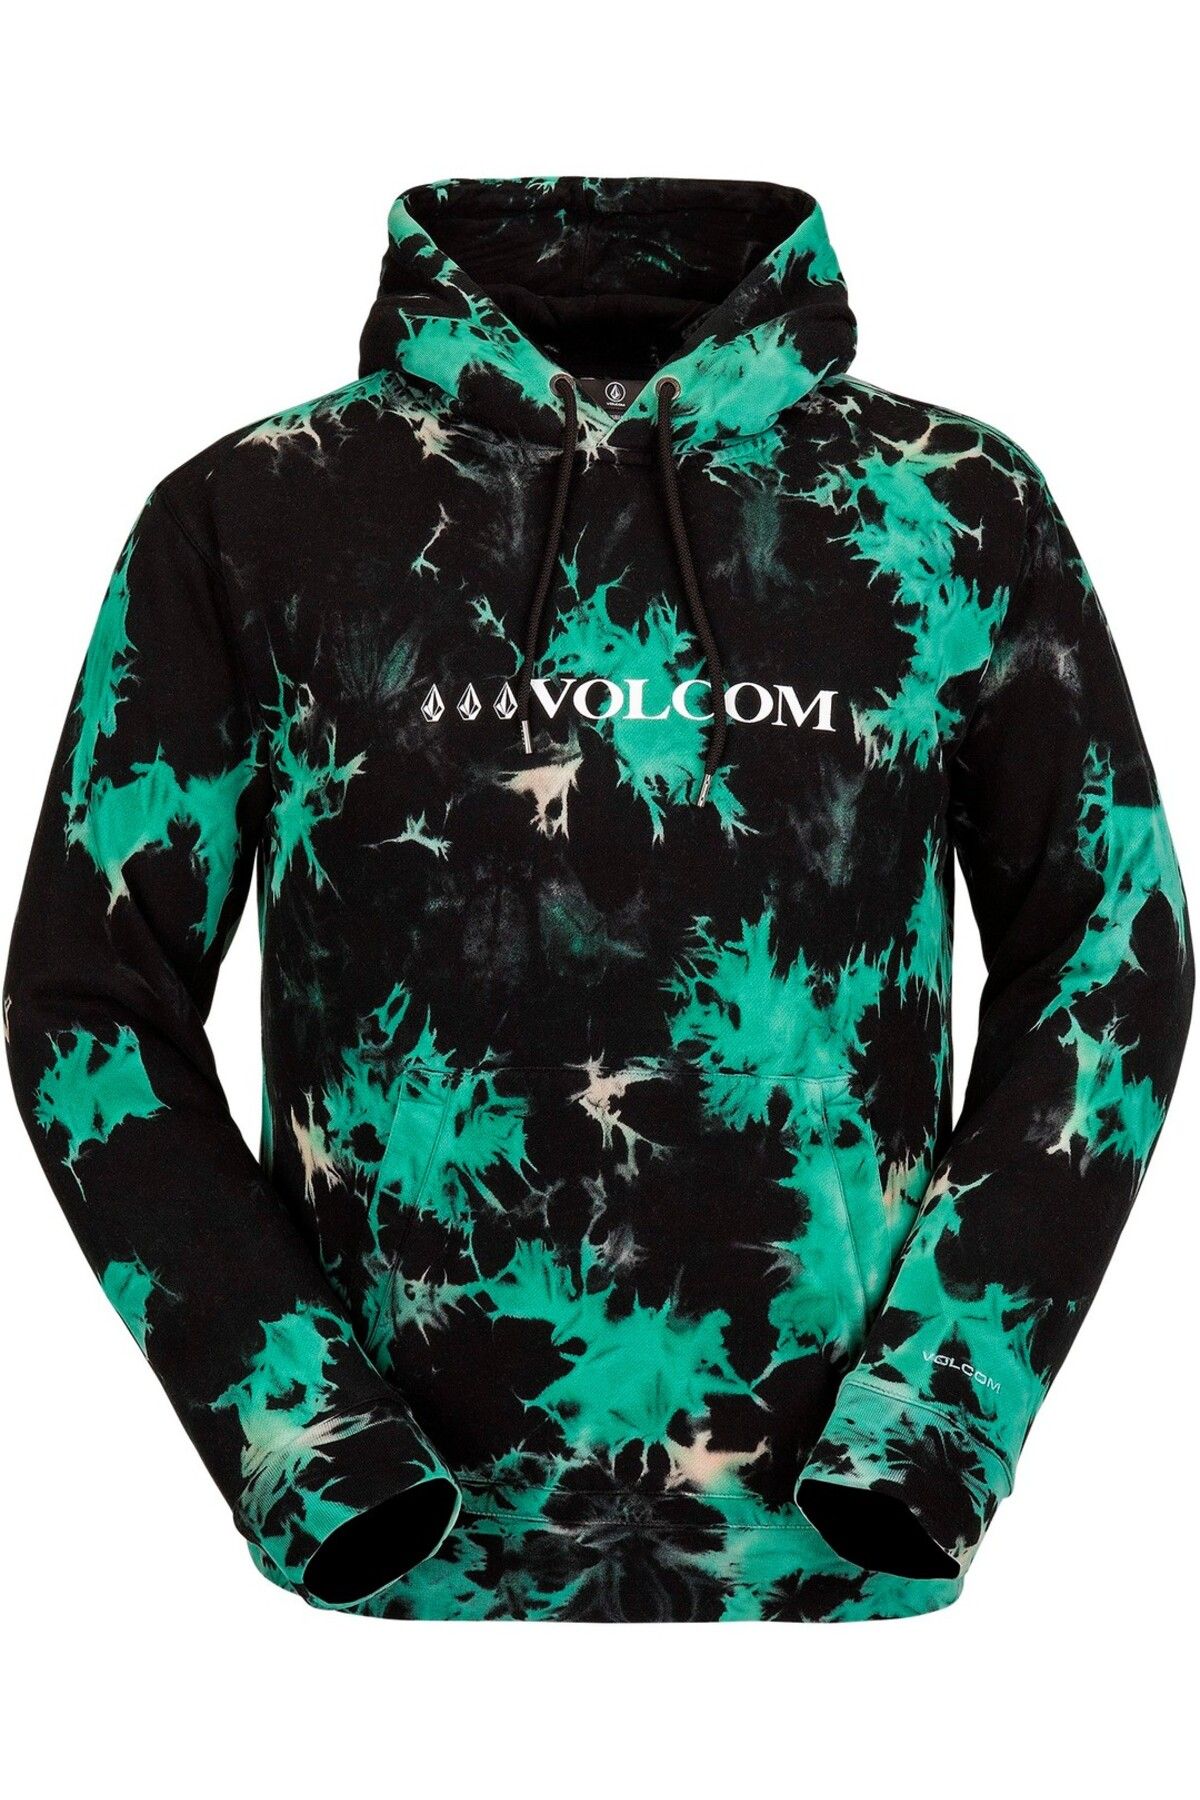 Volcom Hydro R B Erkek Snowboard Sweatshirt